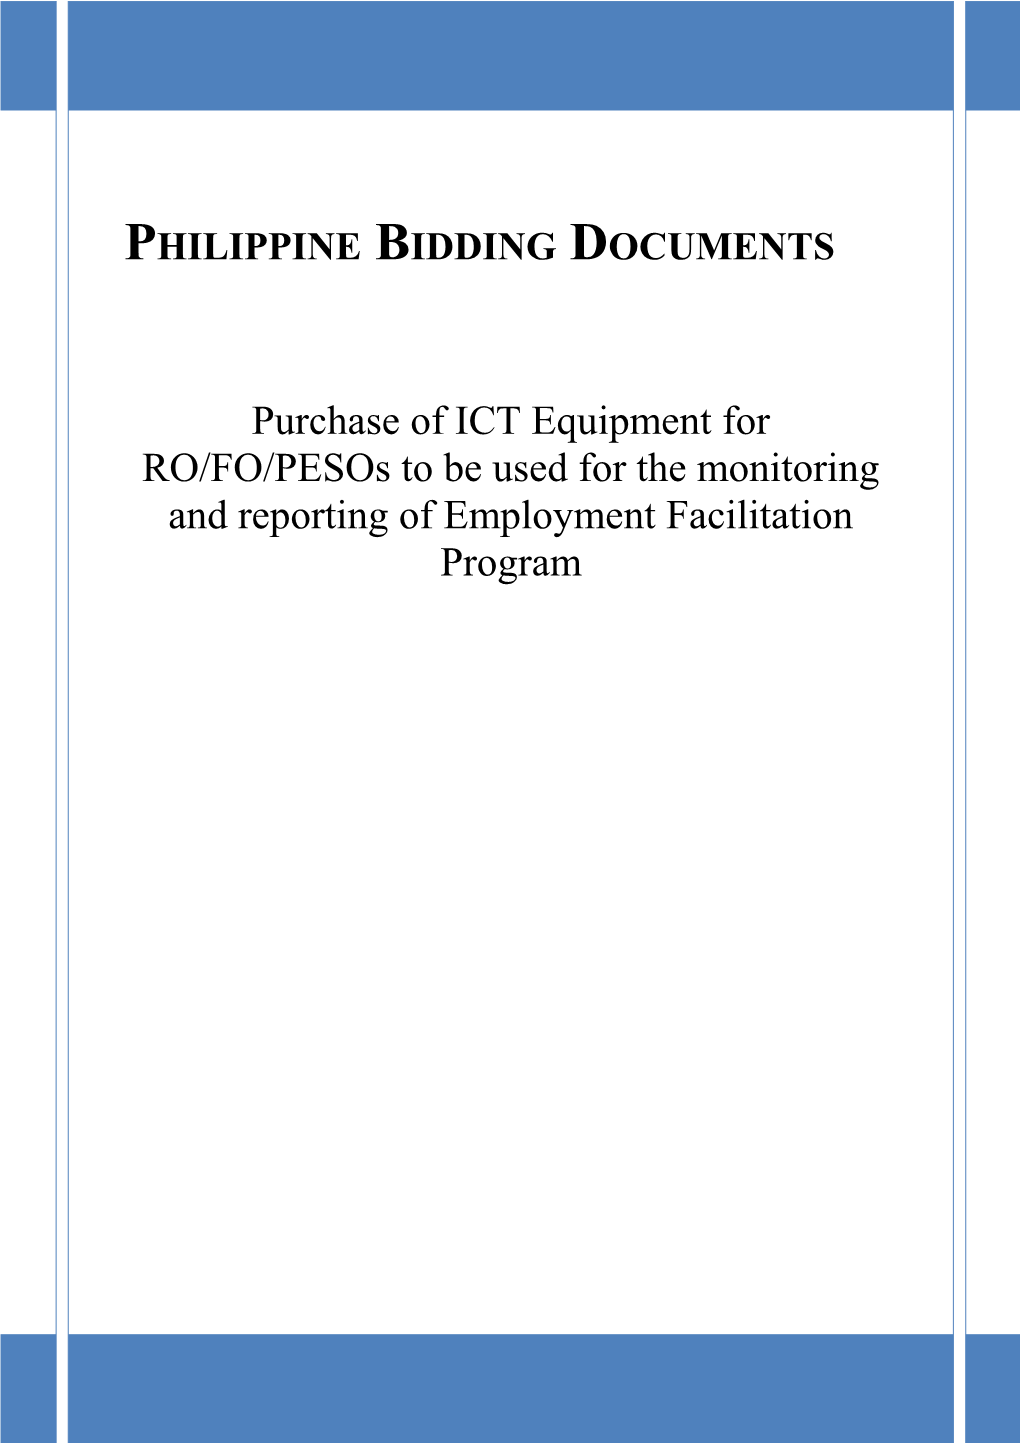 Philippine Bidding Documents s1